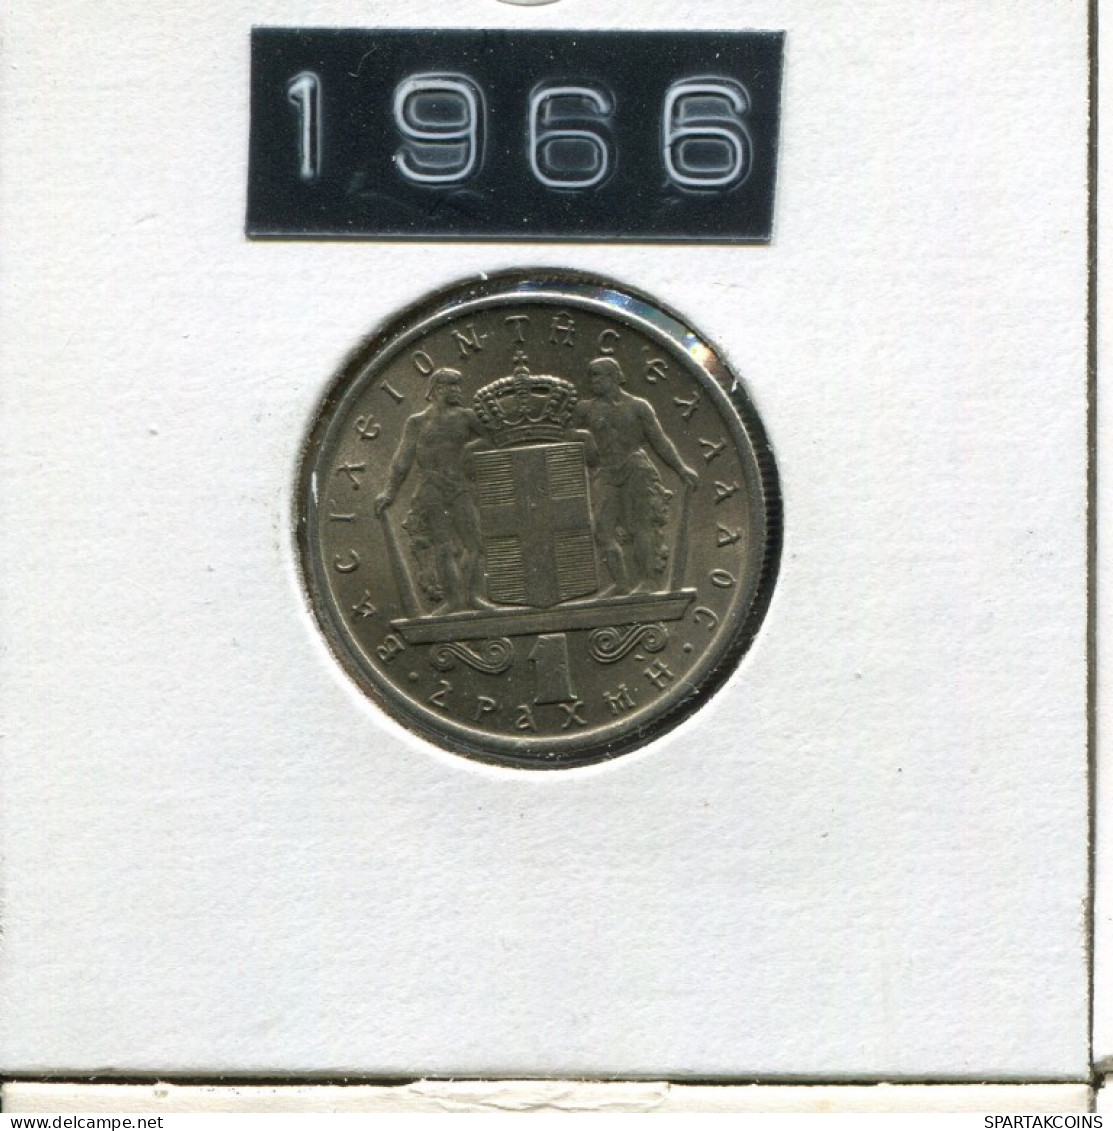 1 DRACHMA 1966 GREECE Coin #AK353.U.A - Greece